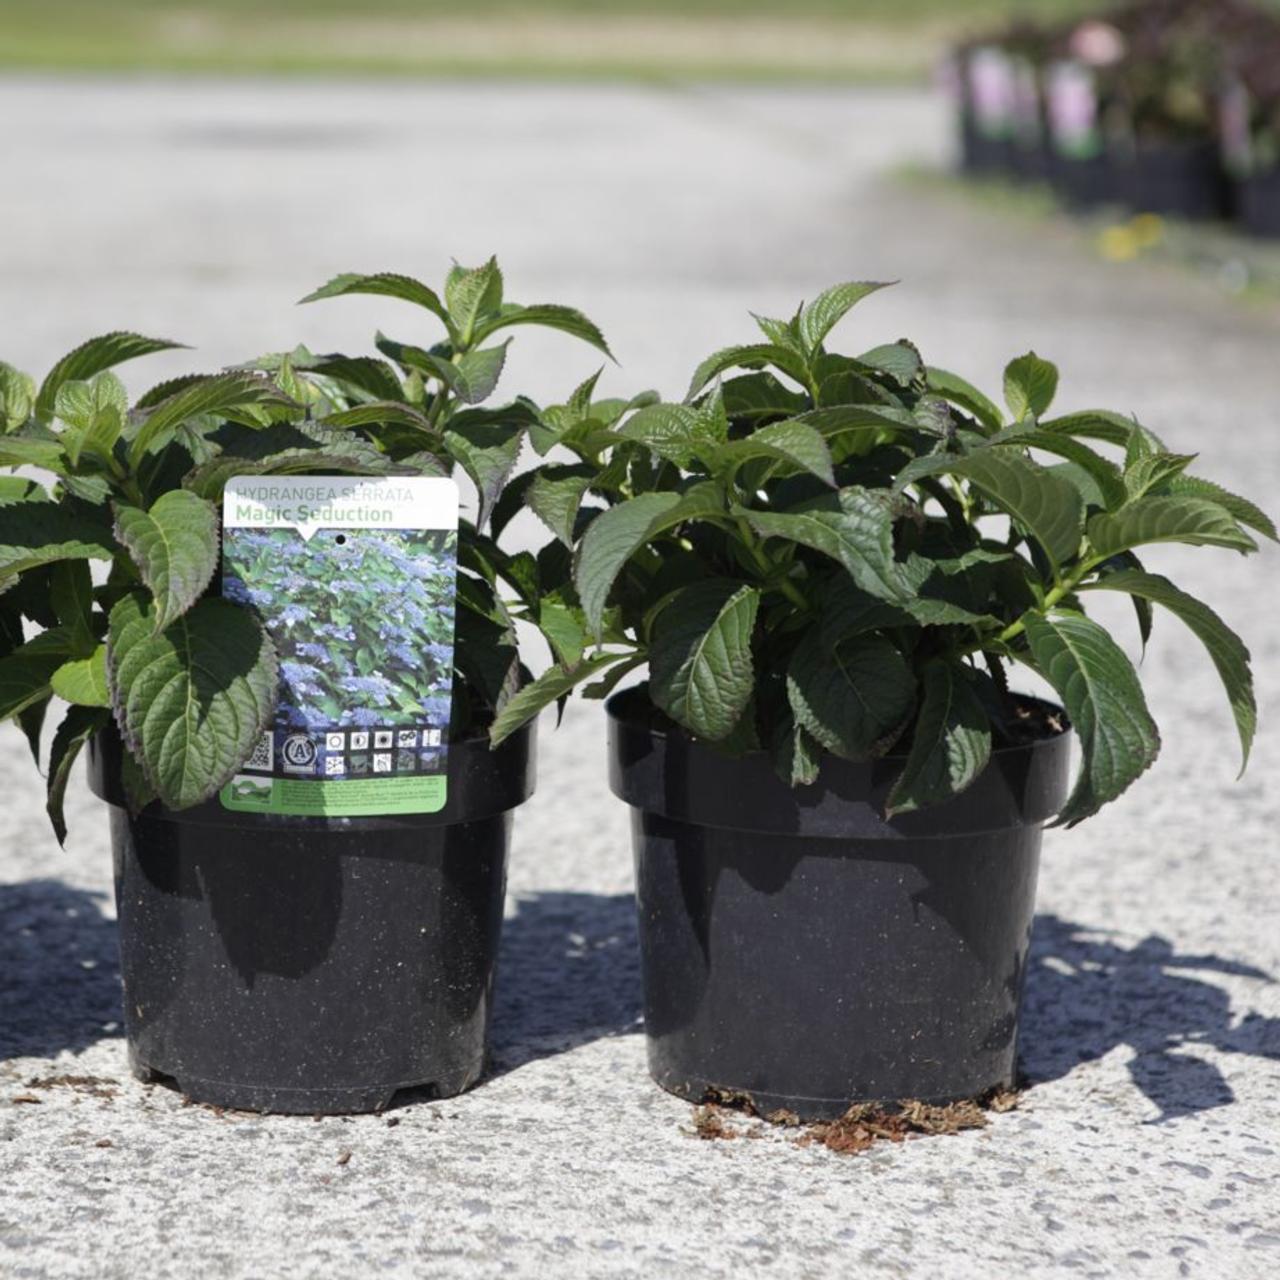 Hydrangea serrata 'Magic Seduction' plant